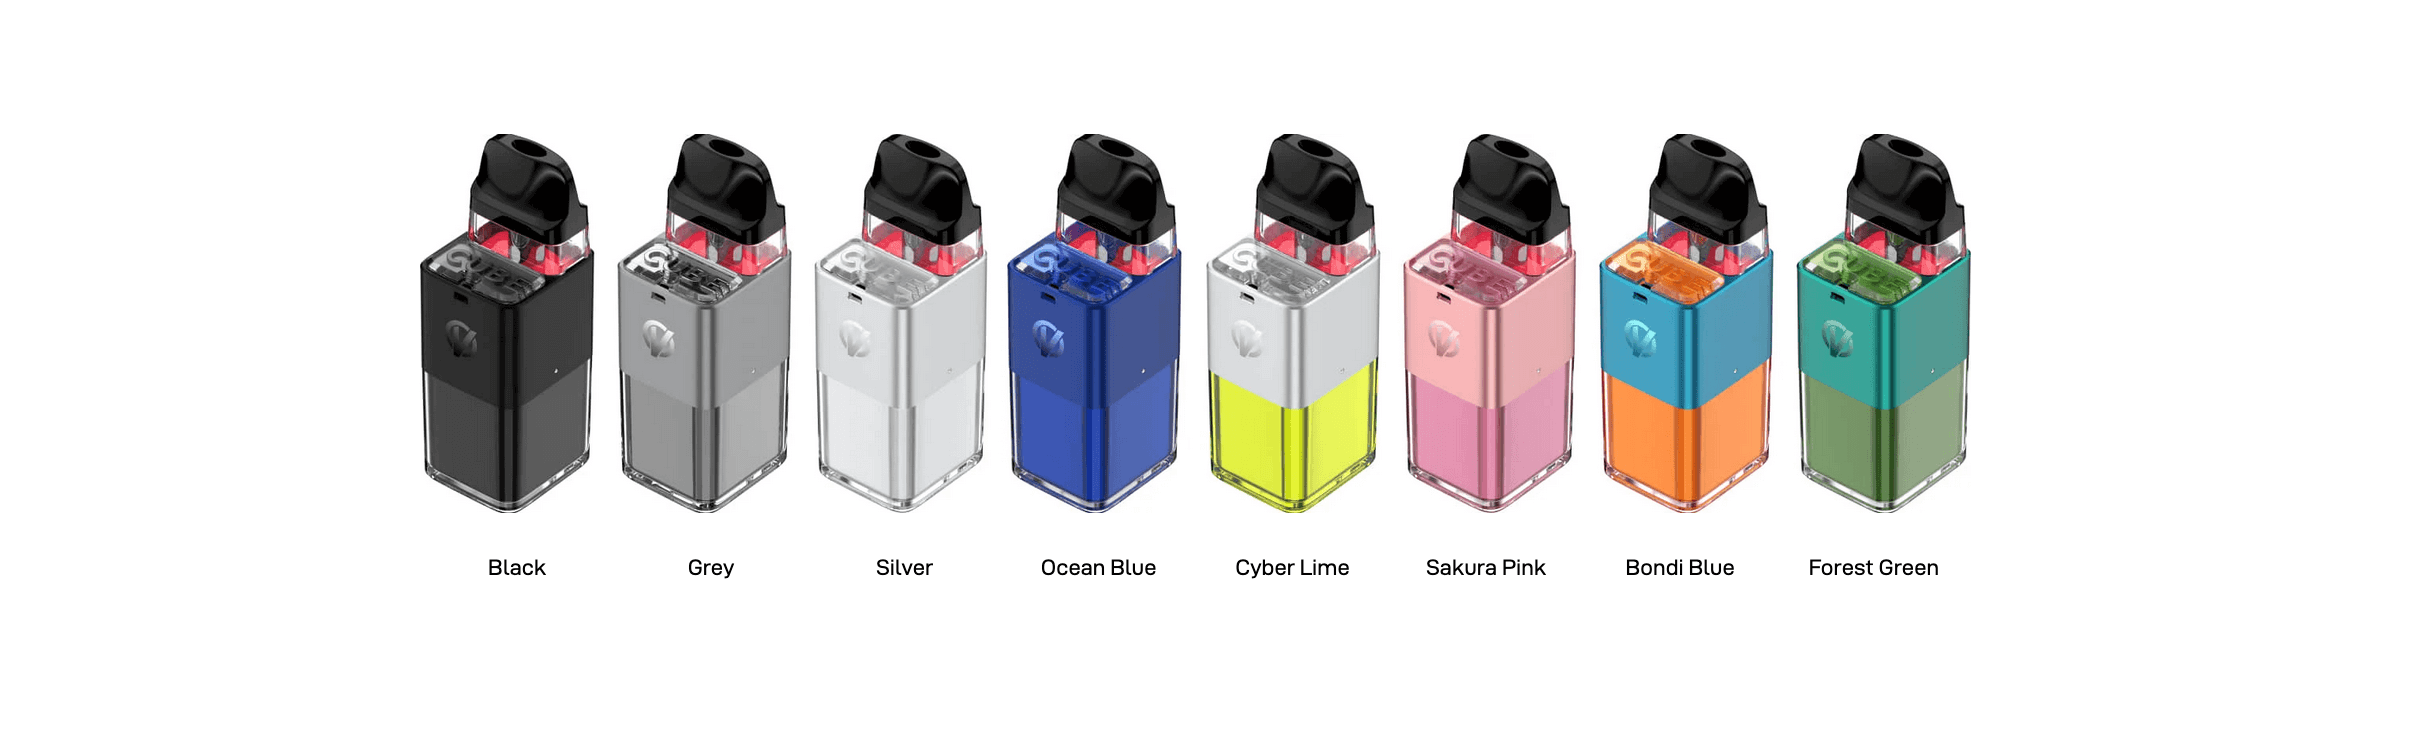 Vaporesso Xros Cube Vape Kit - Colour options; Black, Grey, Silver, Ocean Blue, Cyber Lime, Sakura Pink, Bondi Blue, Forest Green